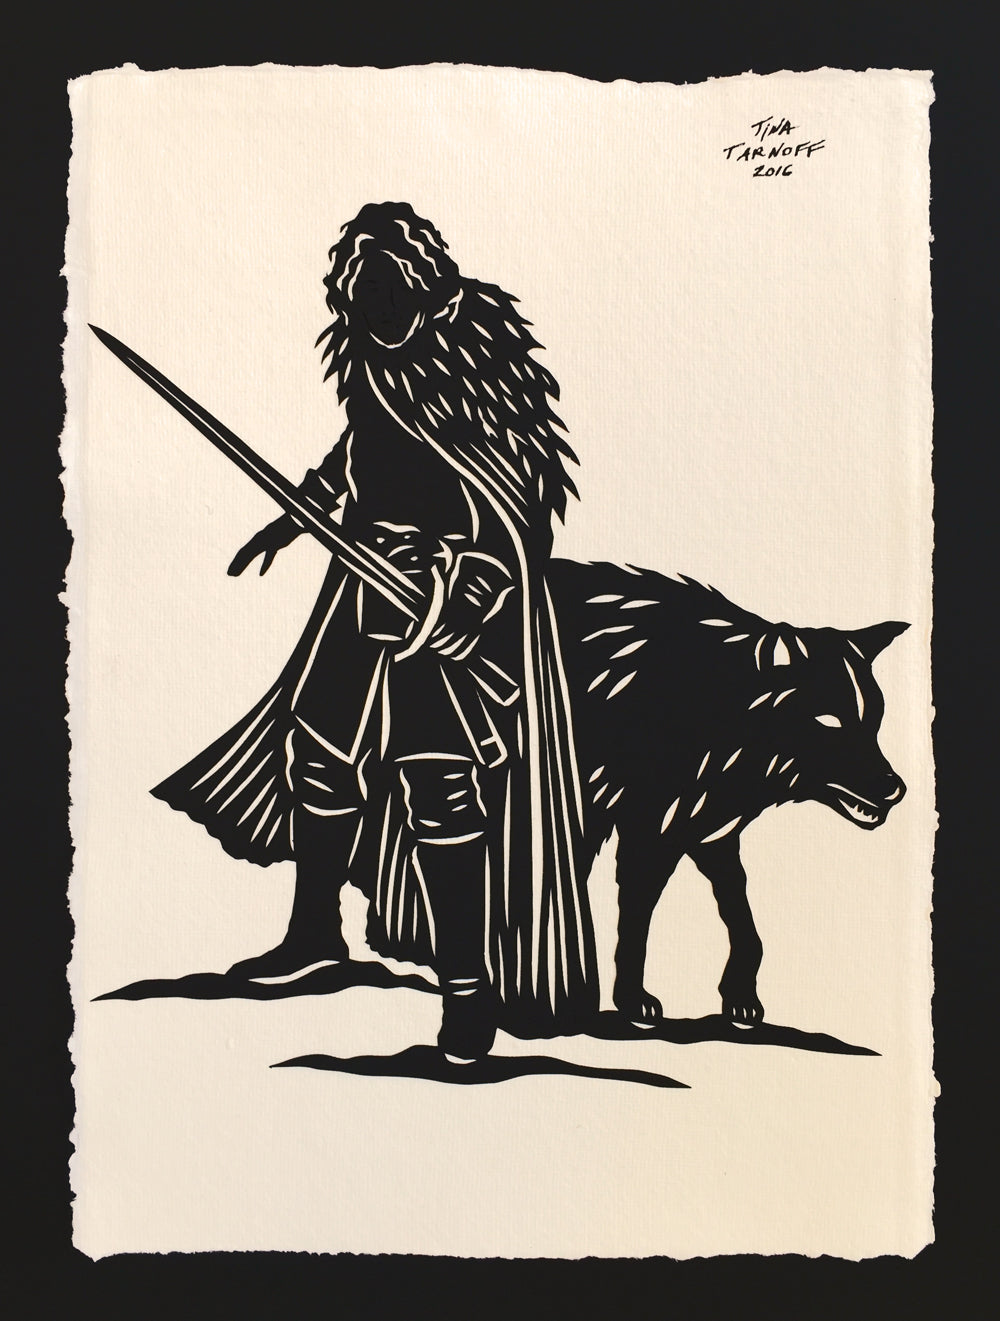 Game of Thrones - Jon Snow Papercut - Hand-Cut Silhouette Papercut